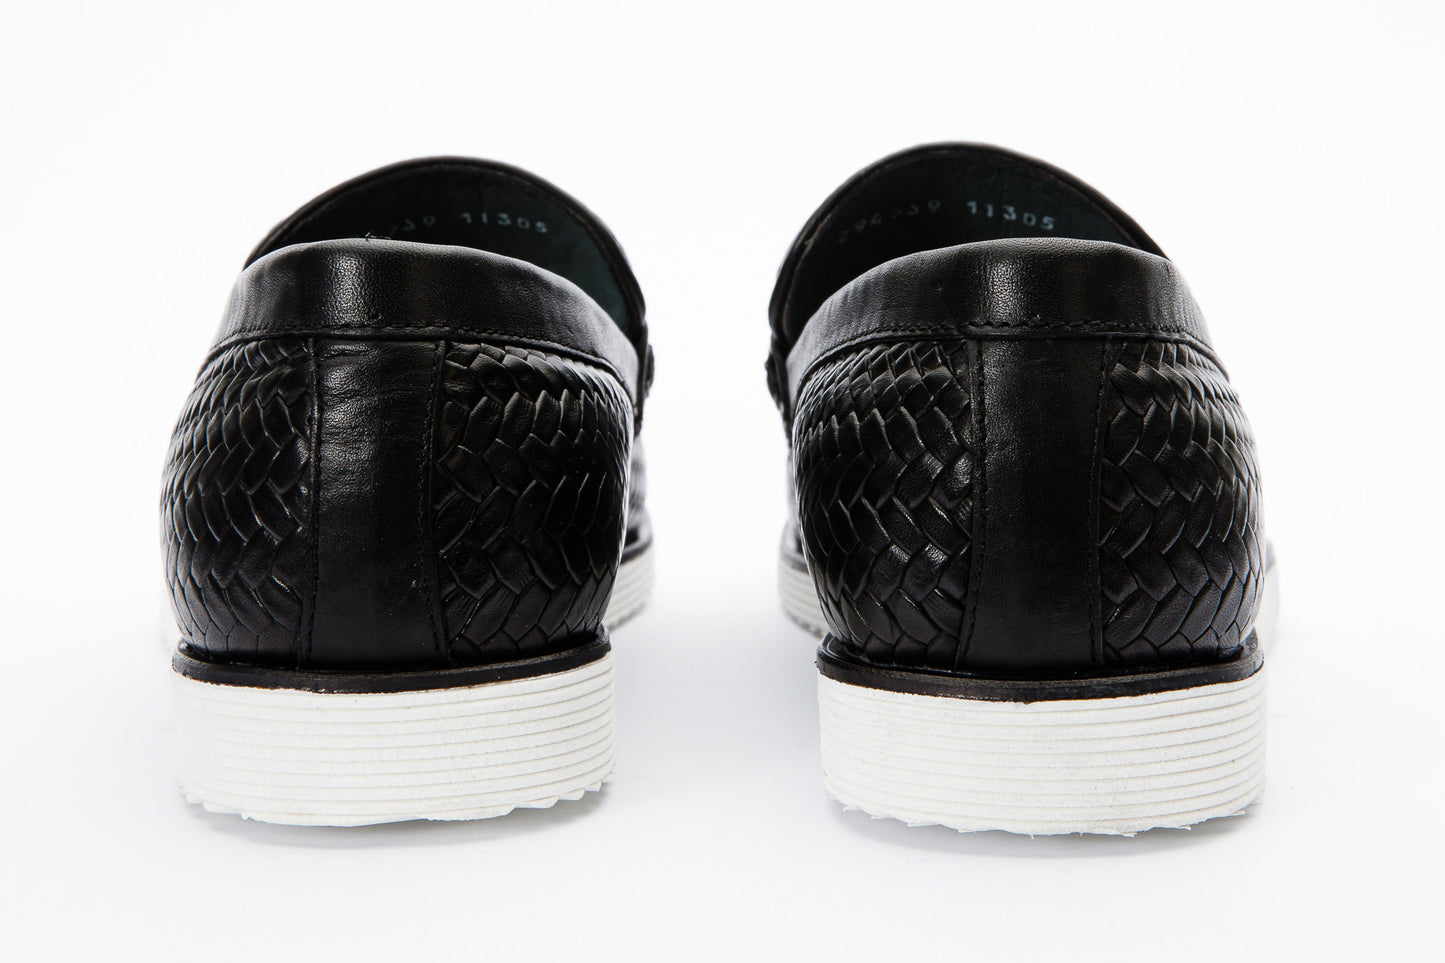 The Sperry Black Leather Tassel Loafer Men Shoe